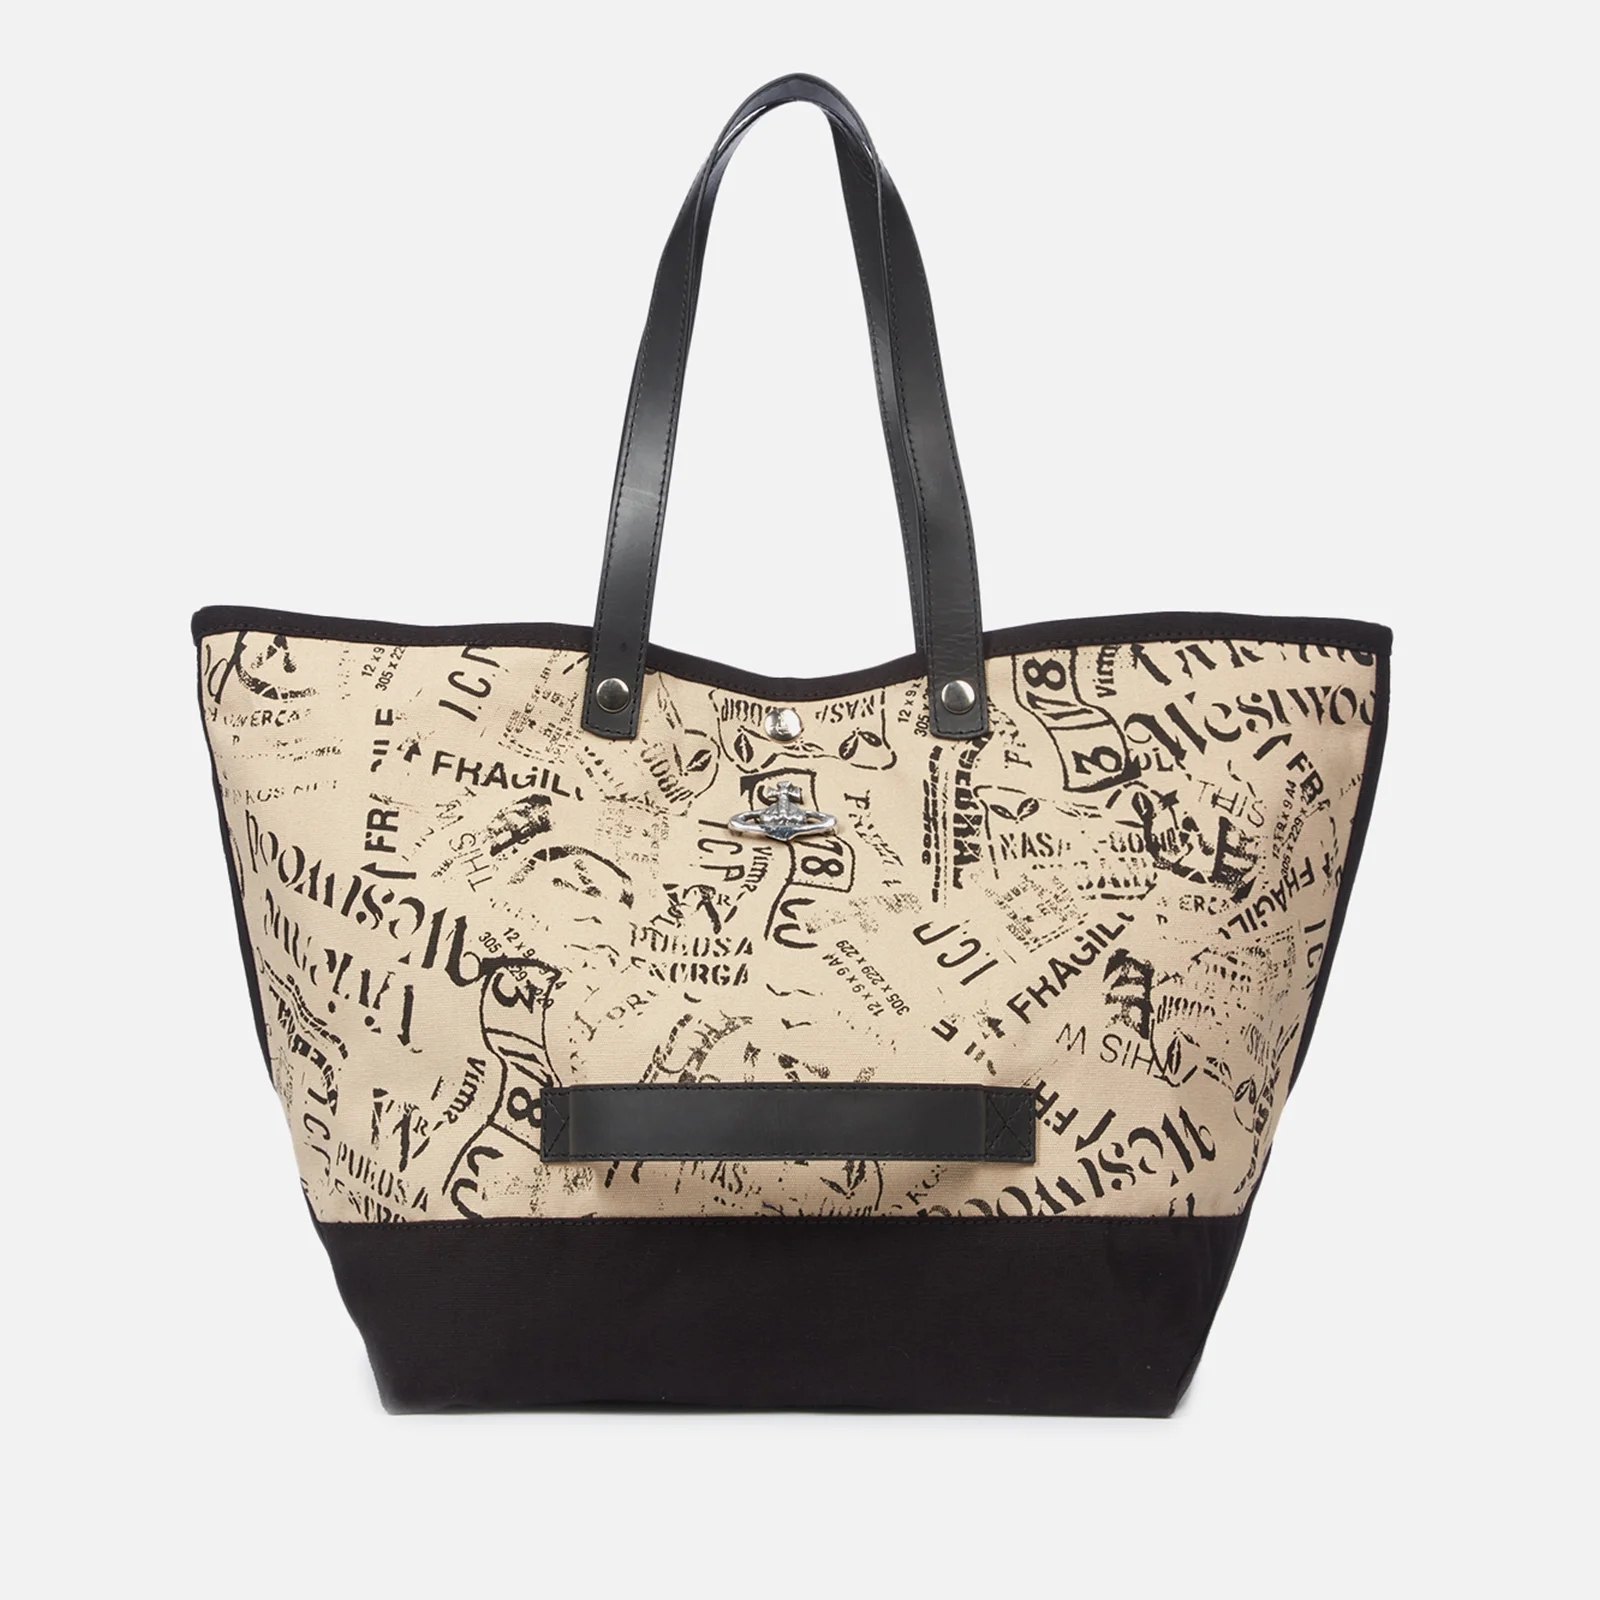 Vivienne Westwood Women's Utility Shopper Bag - Beige Image 1